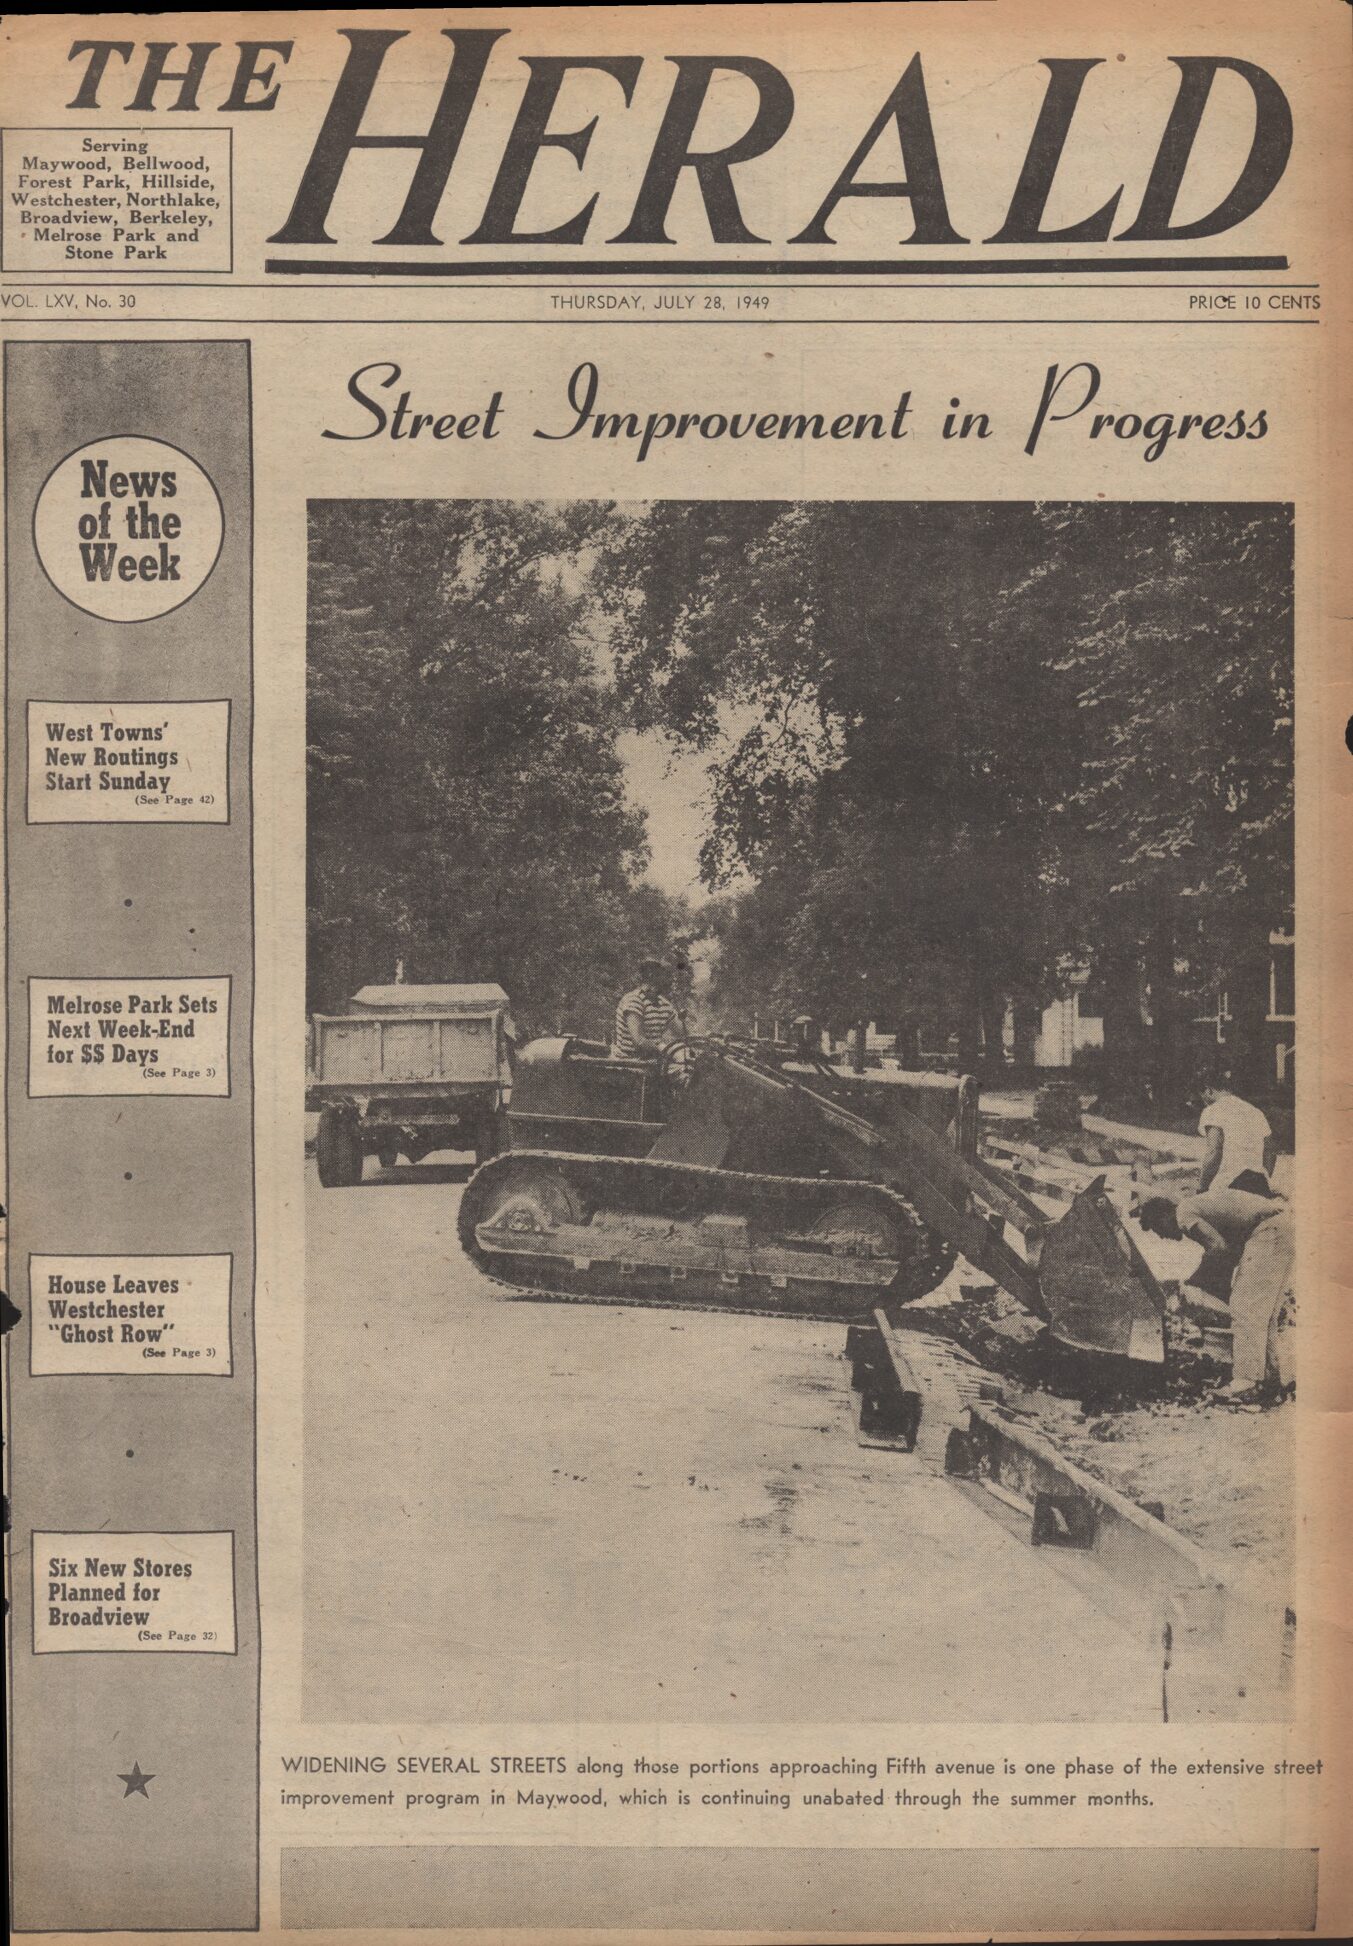 The Herald – 19490728